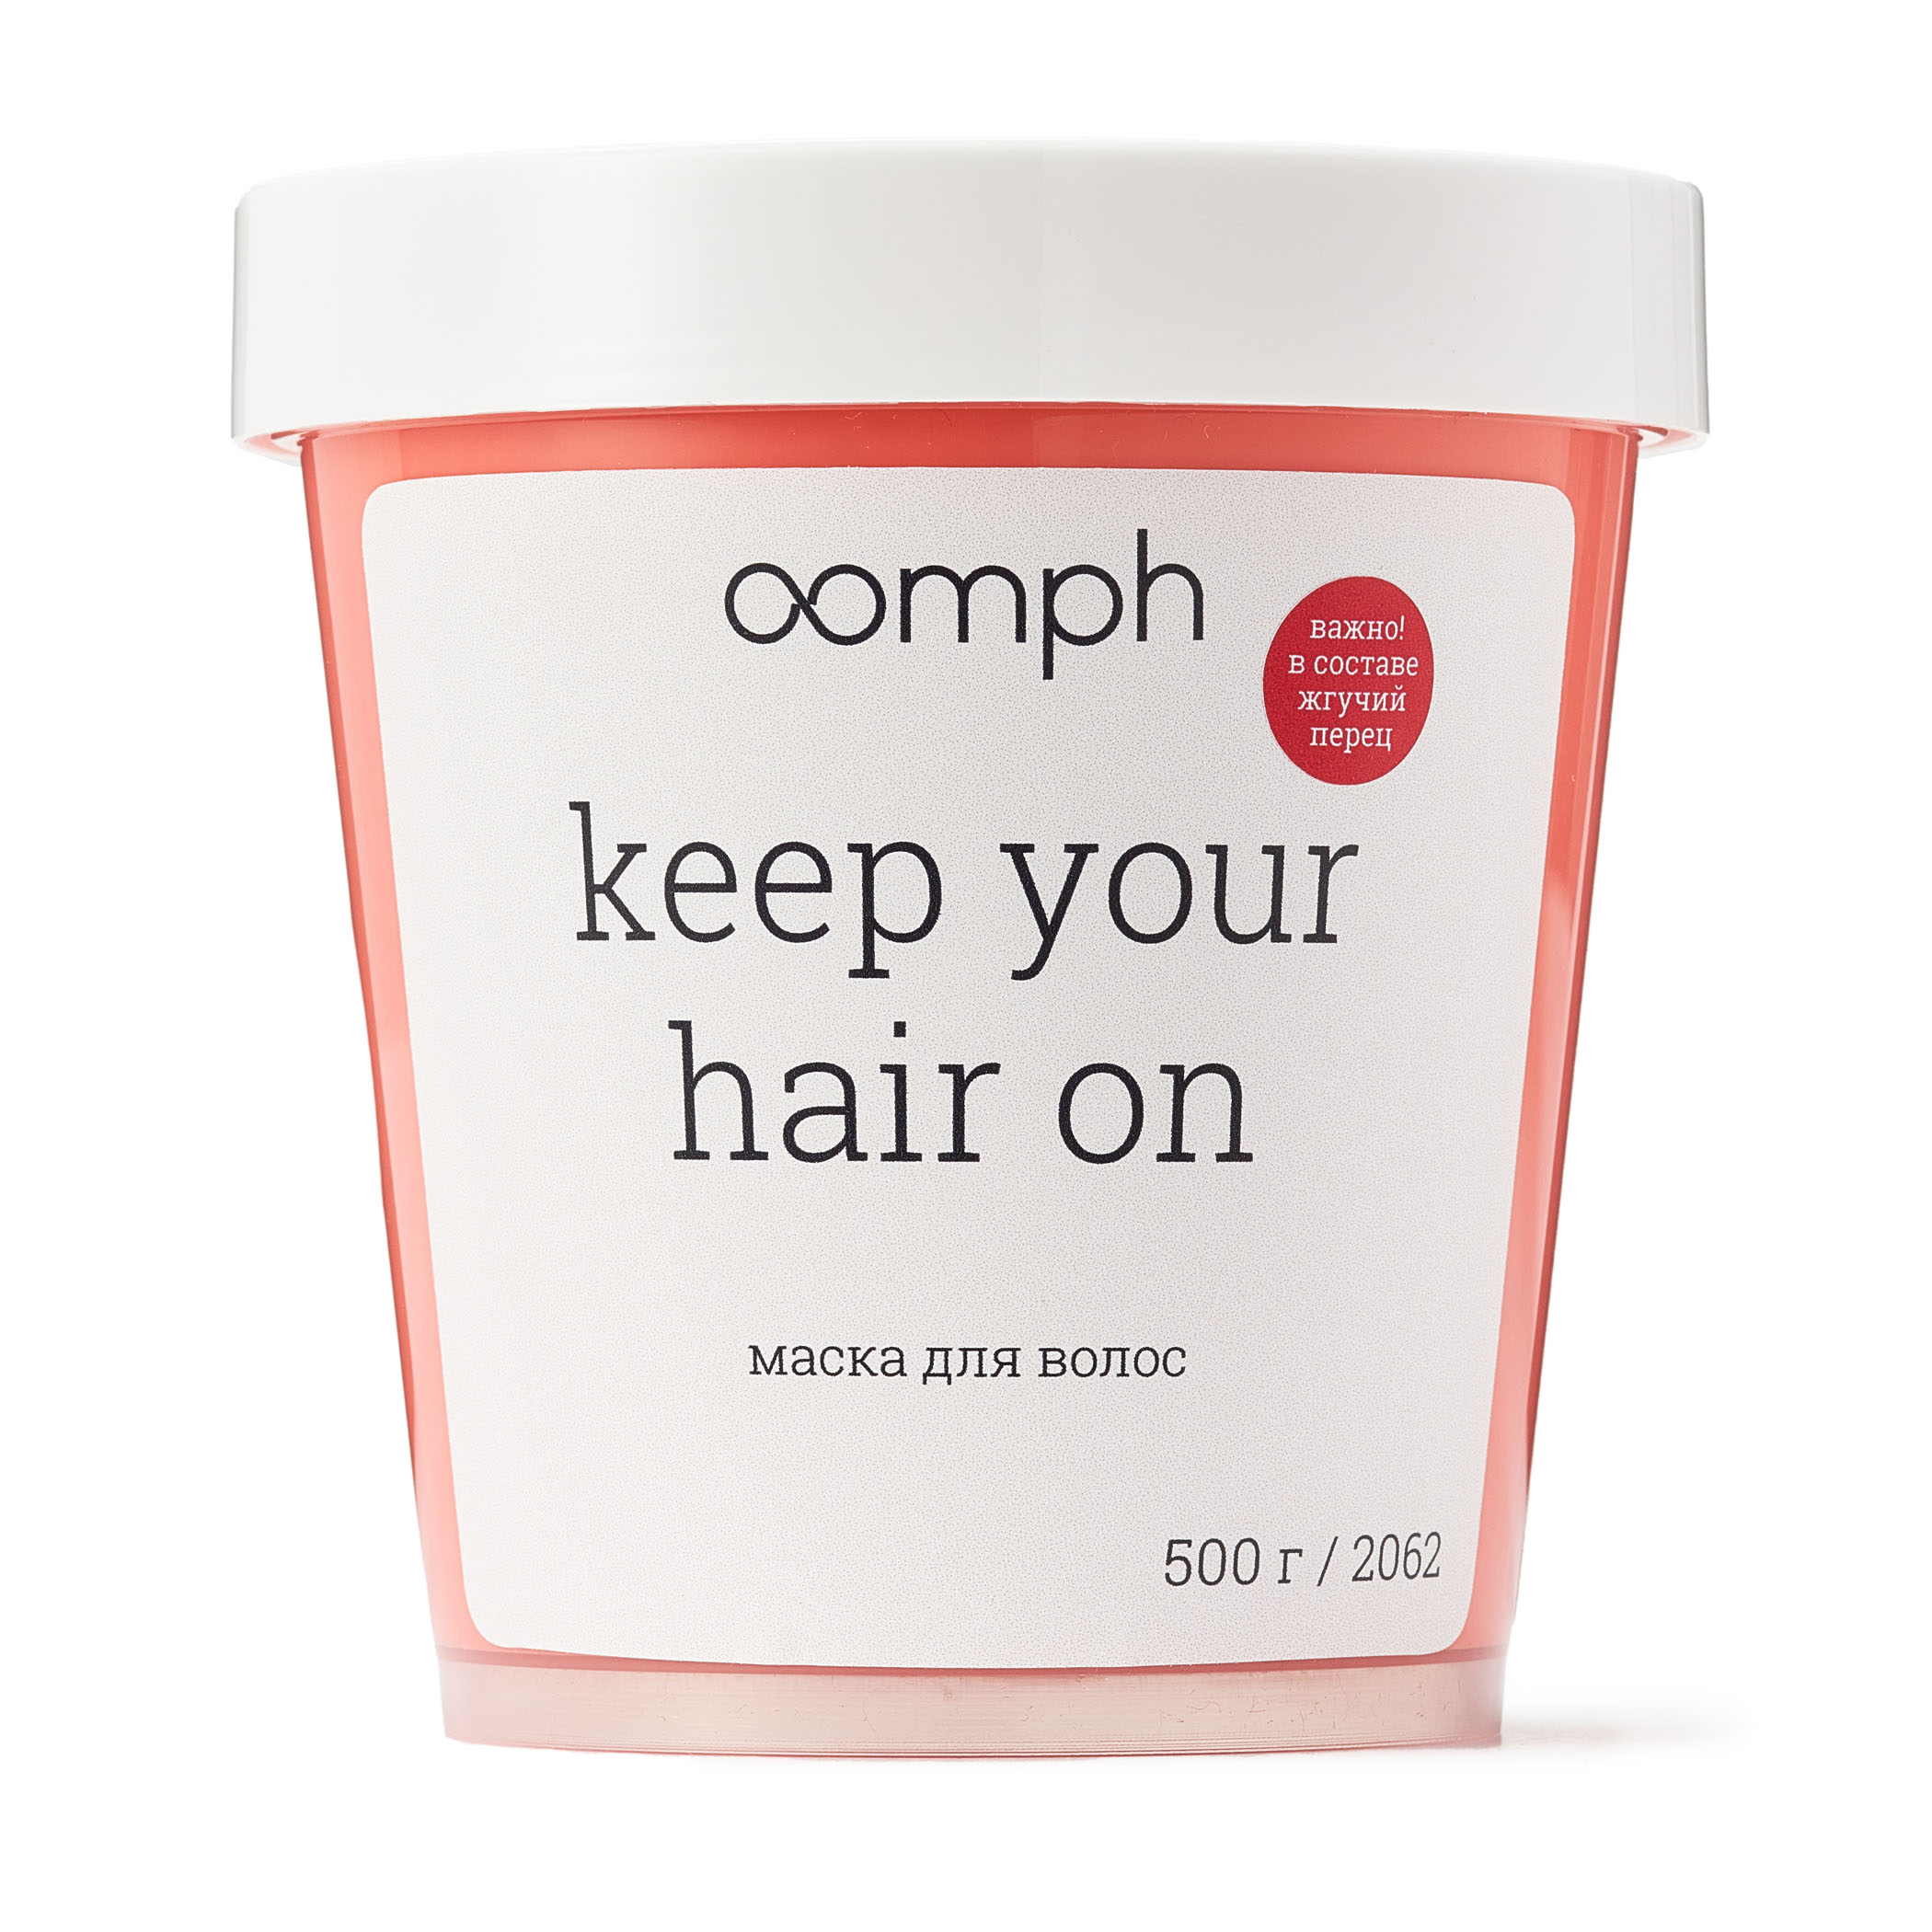 Маска для волос Oomph Keep your hair on 500г